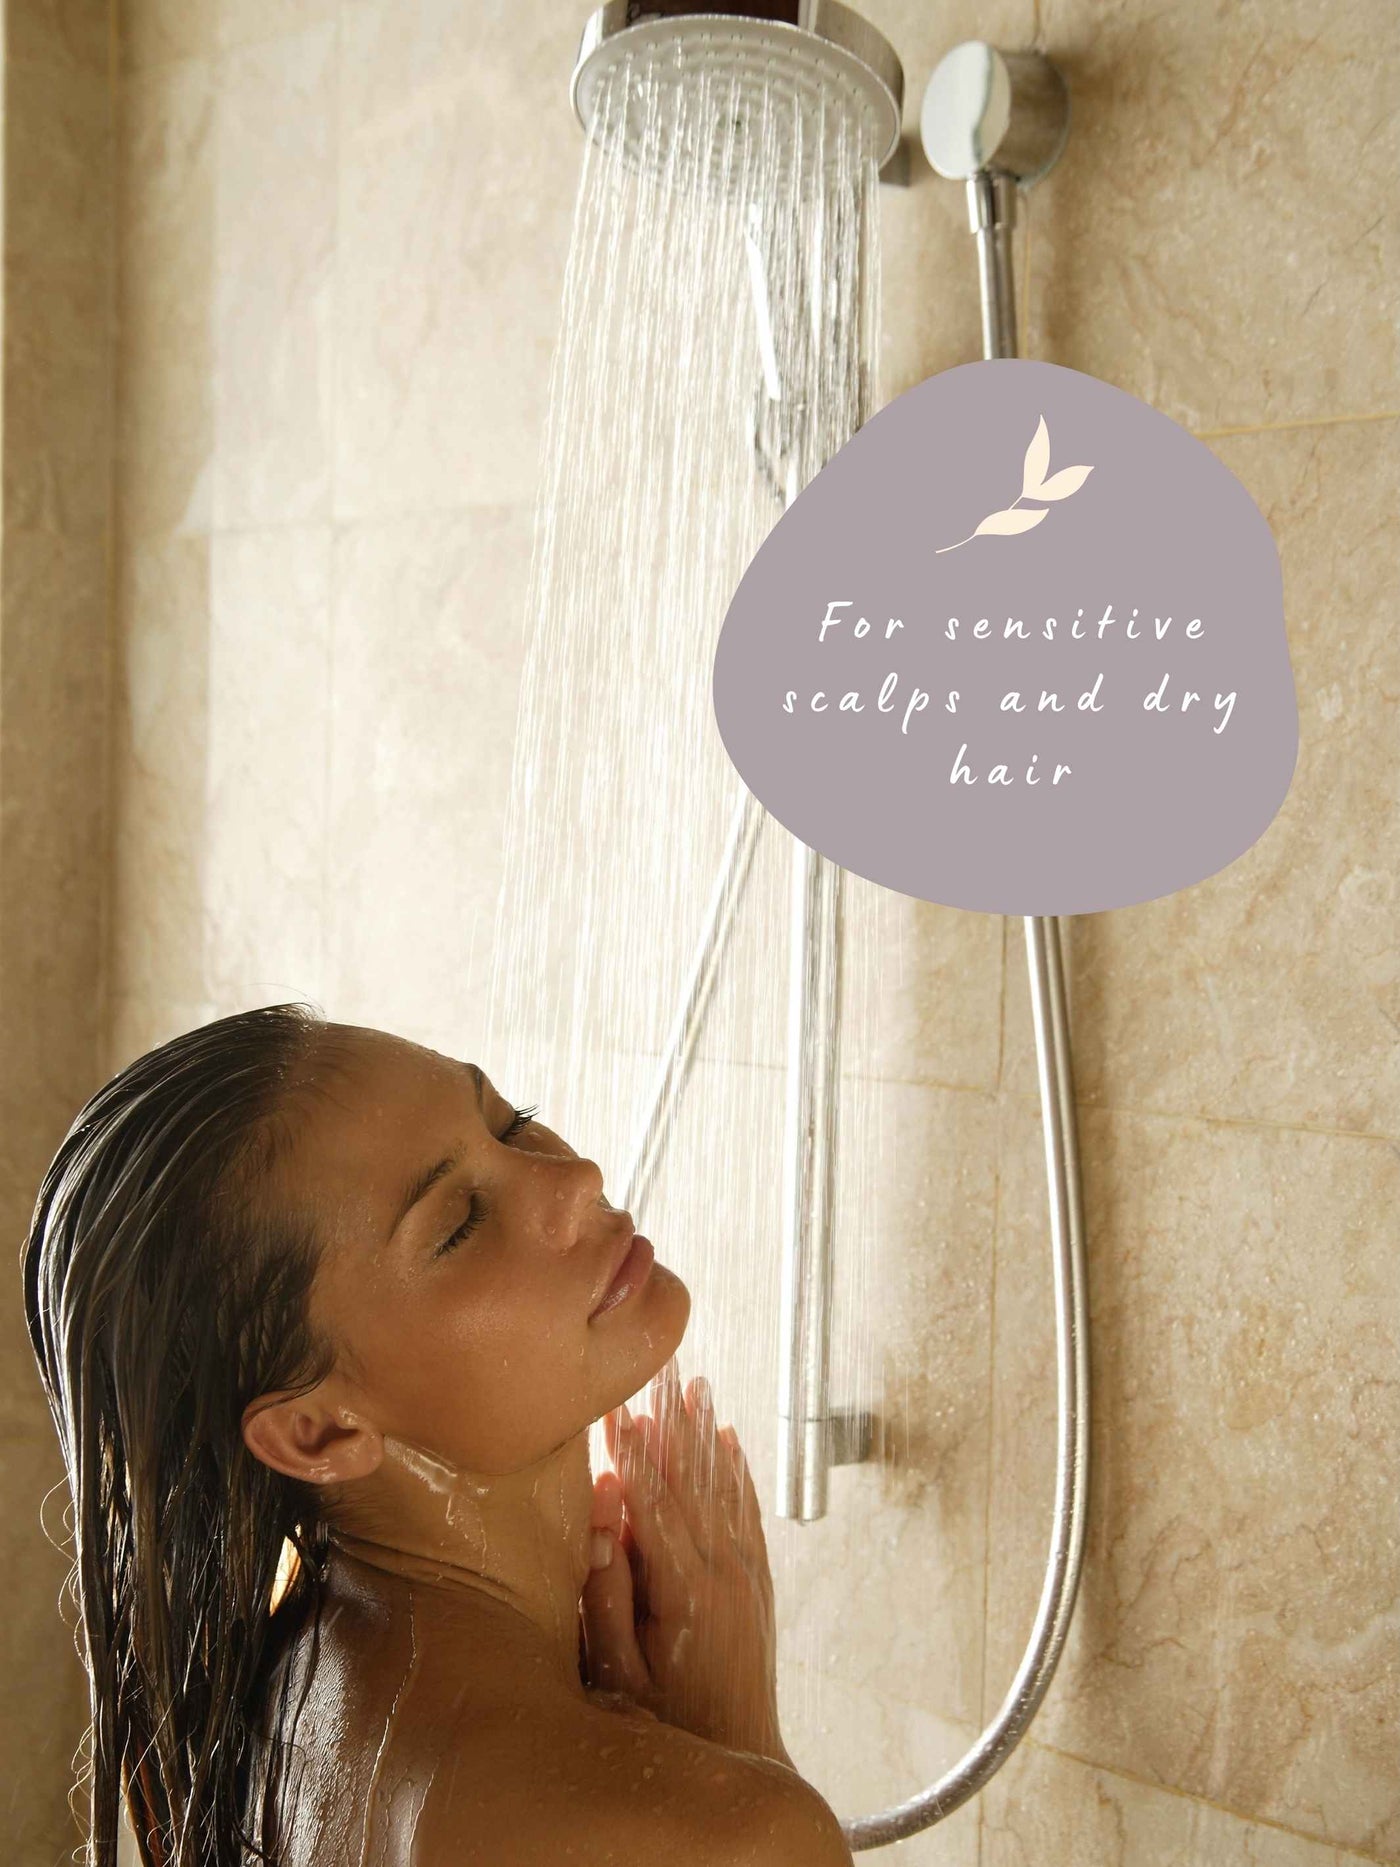 Lady washing her hair using Eco-Friendly Organic Shampoo Bar - Shapo’netta Shea Butter by Conlemany®